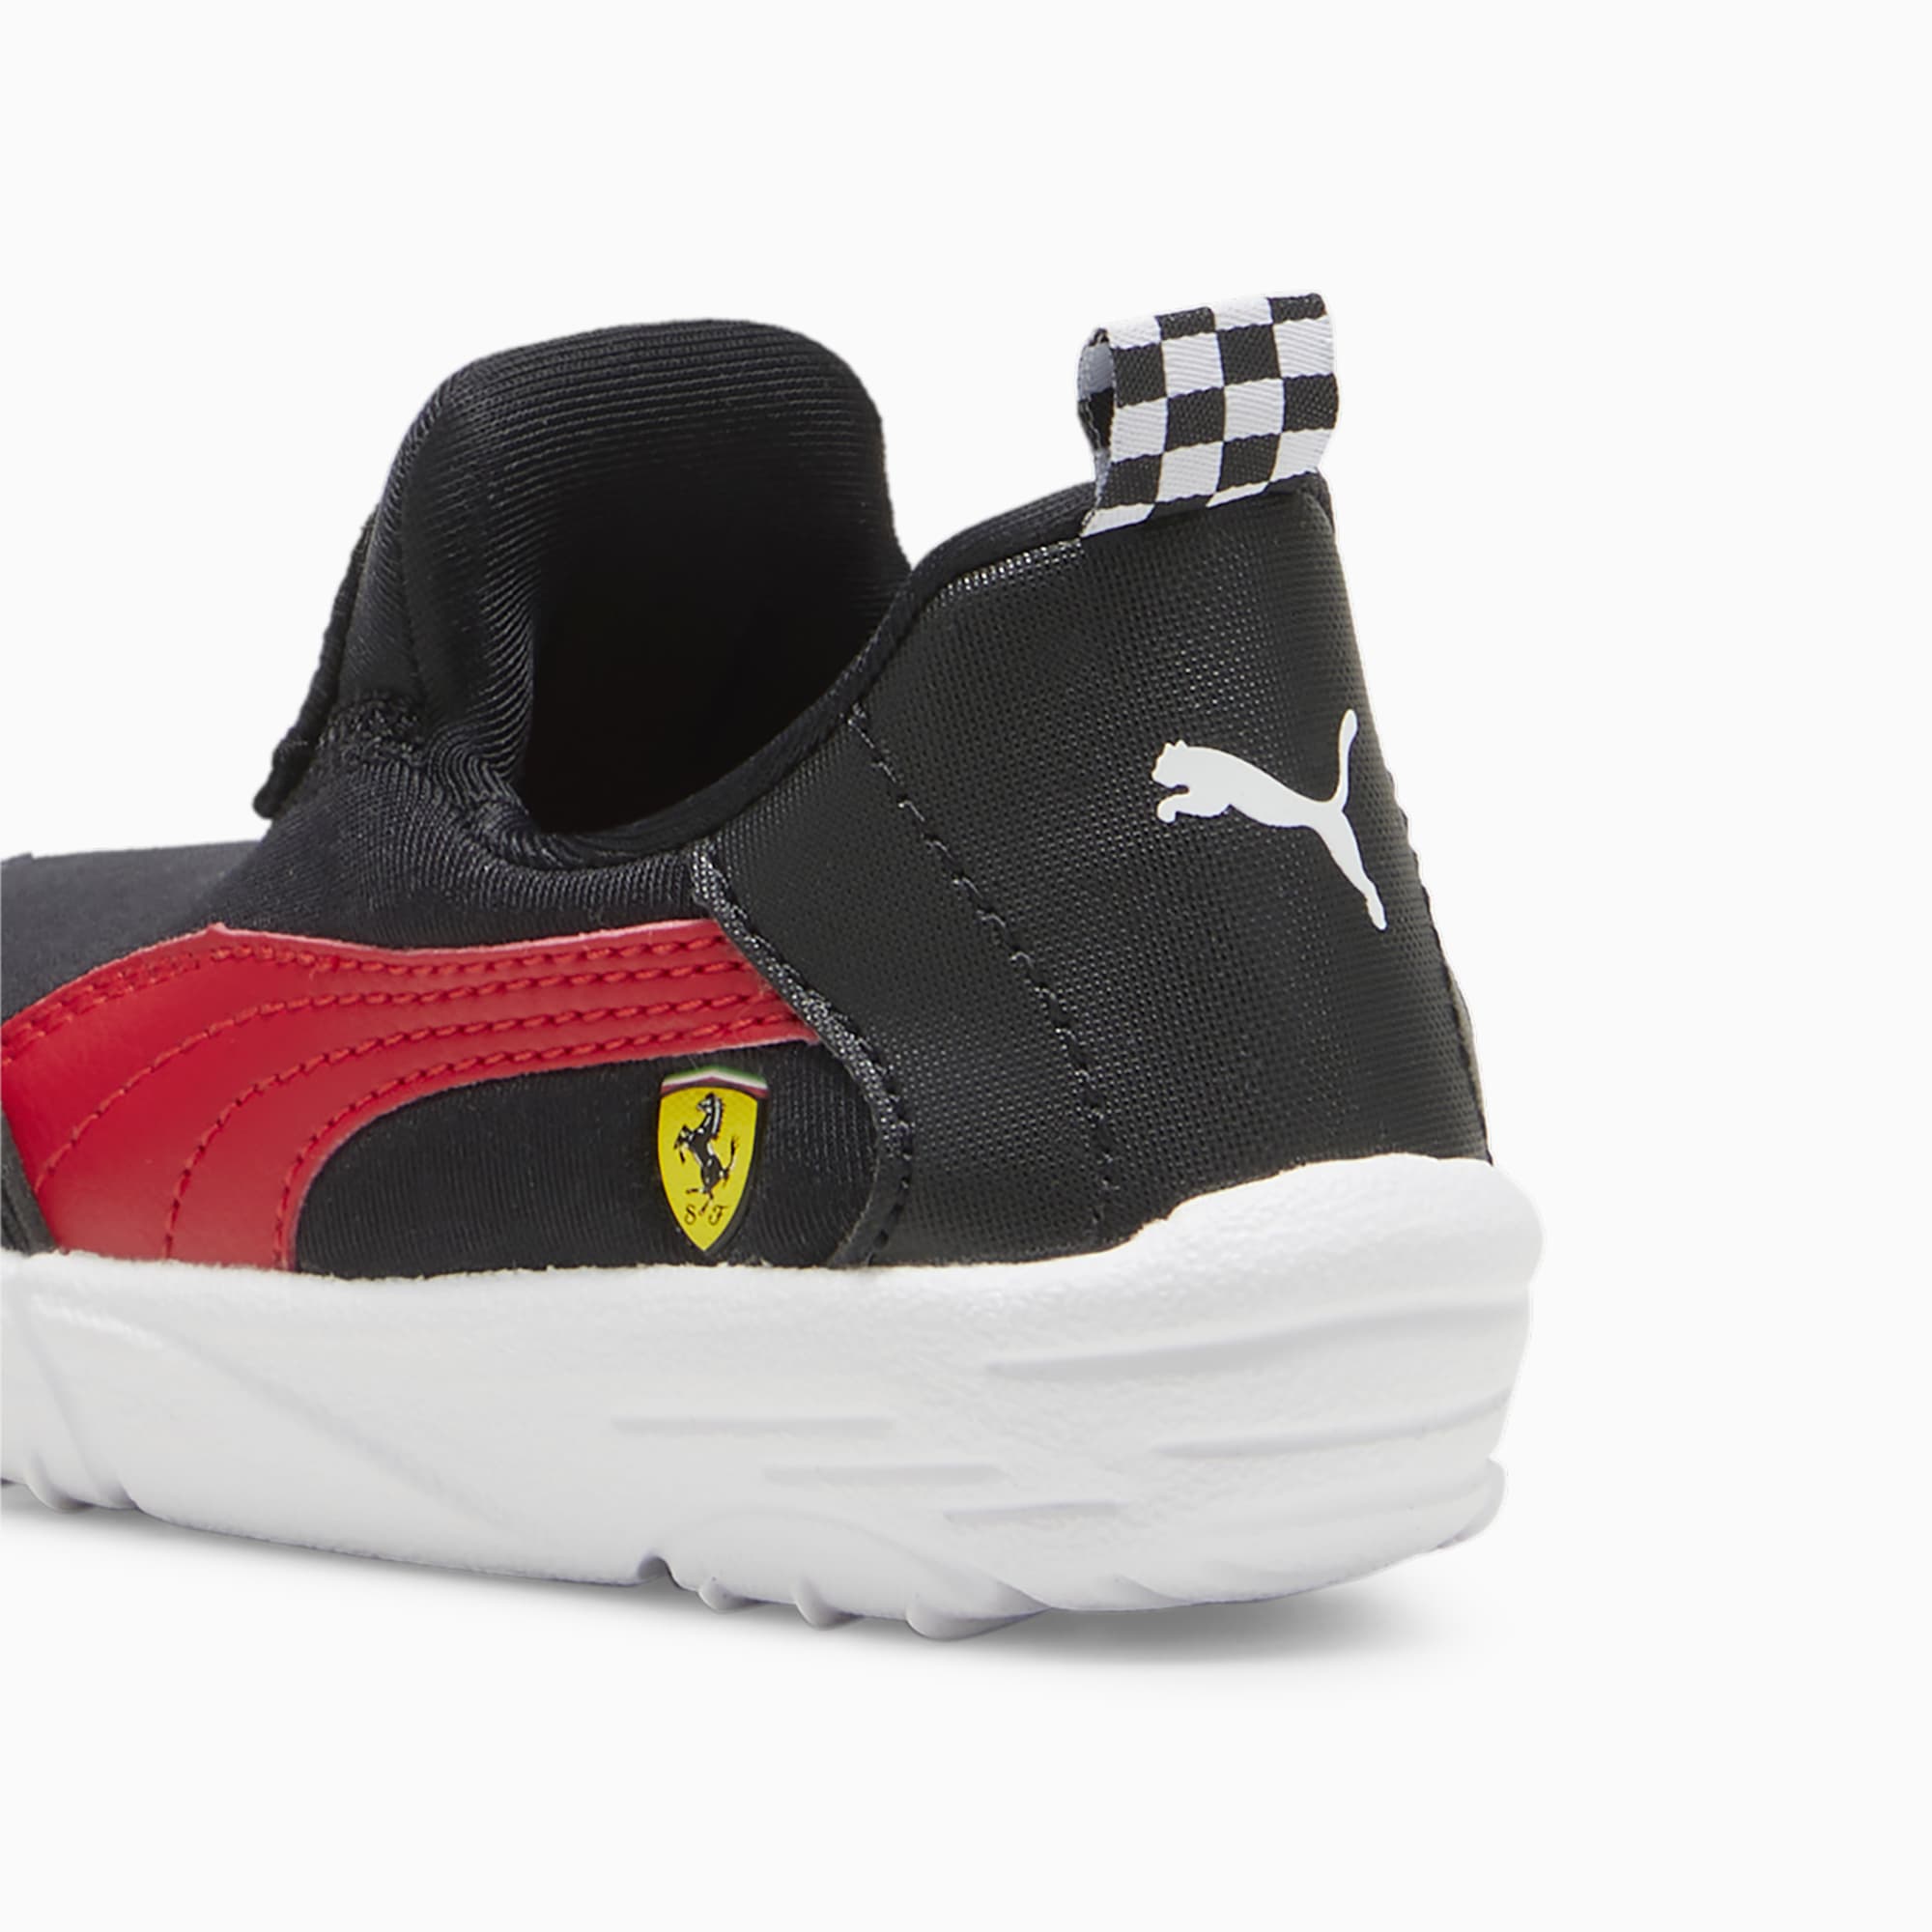 PUMA Scuderia Ferrari Bao Kart Toddlers' Motorsport Shoes, Black, Size 19, Shoes